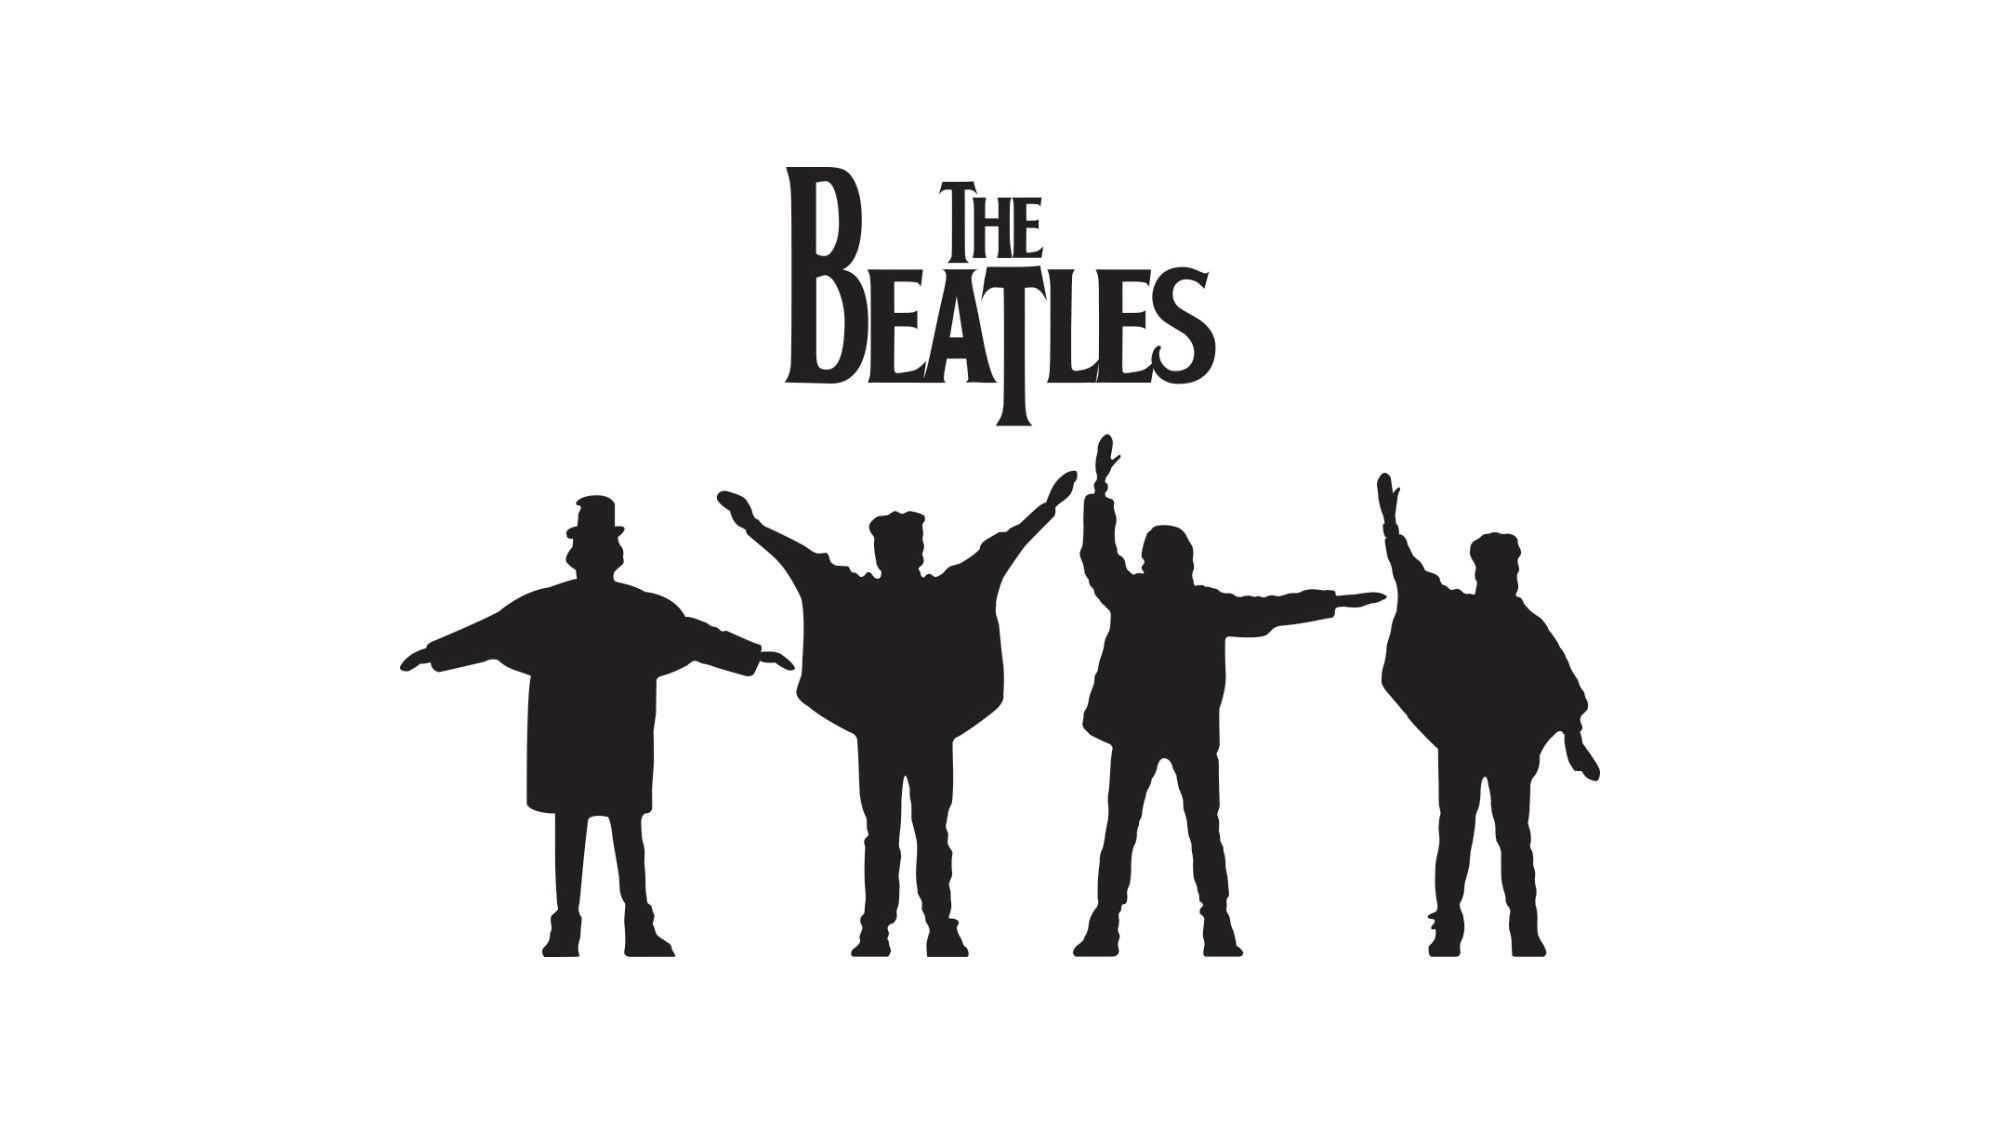 The Beatles John Lennon Paul McCartney Ringo Starr George Harrison 2000x1125